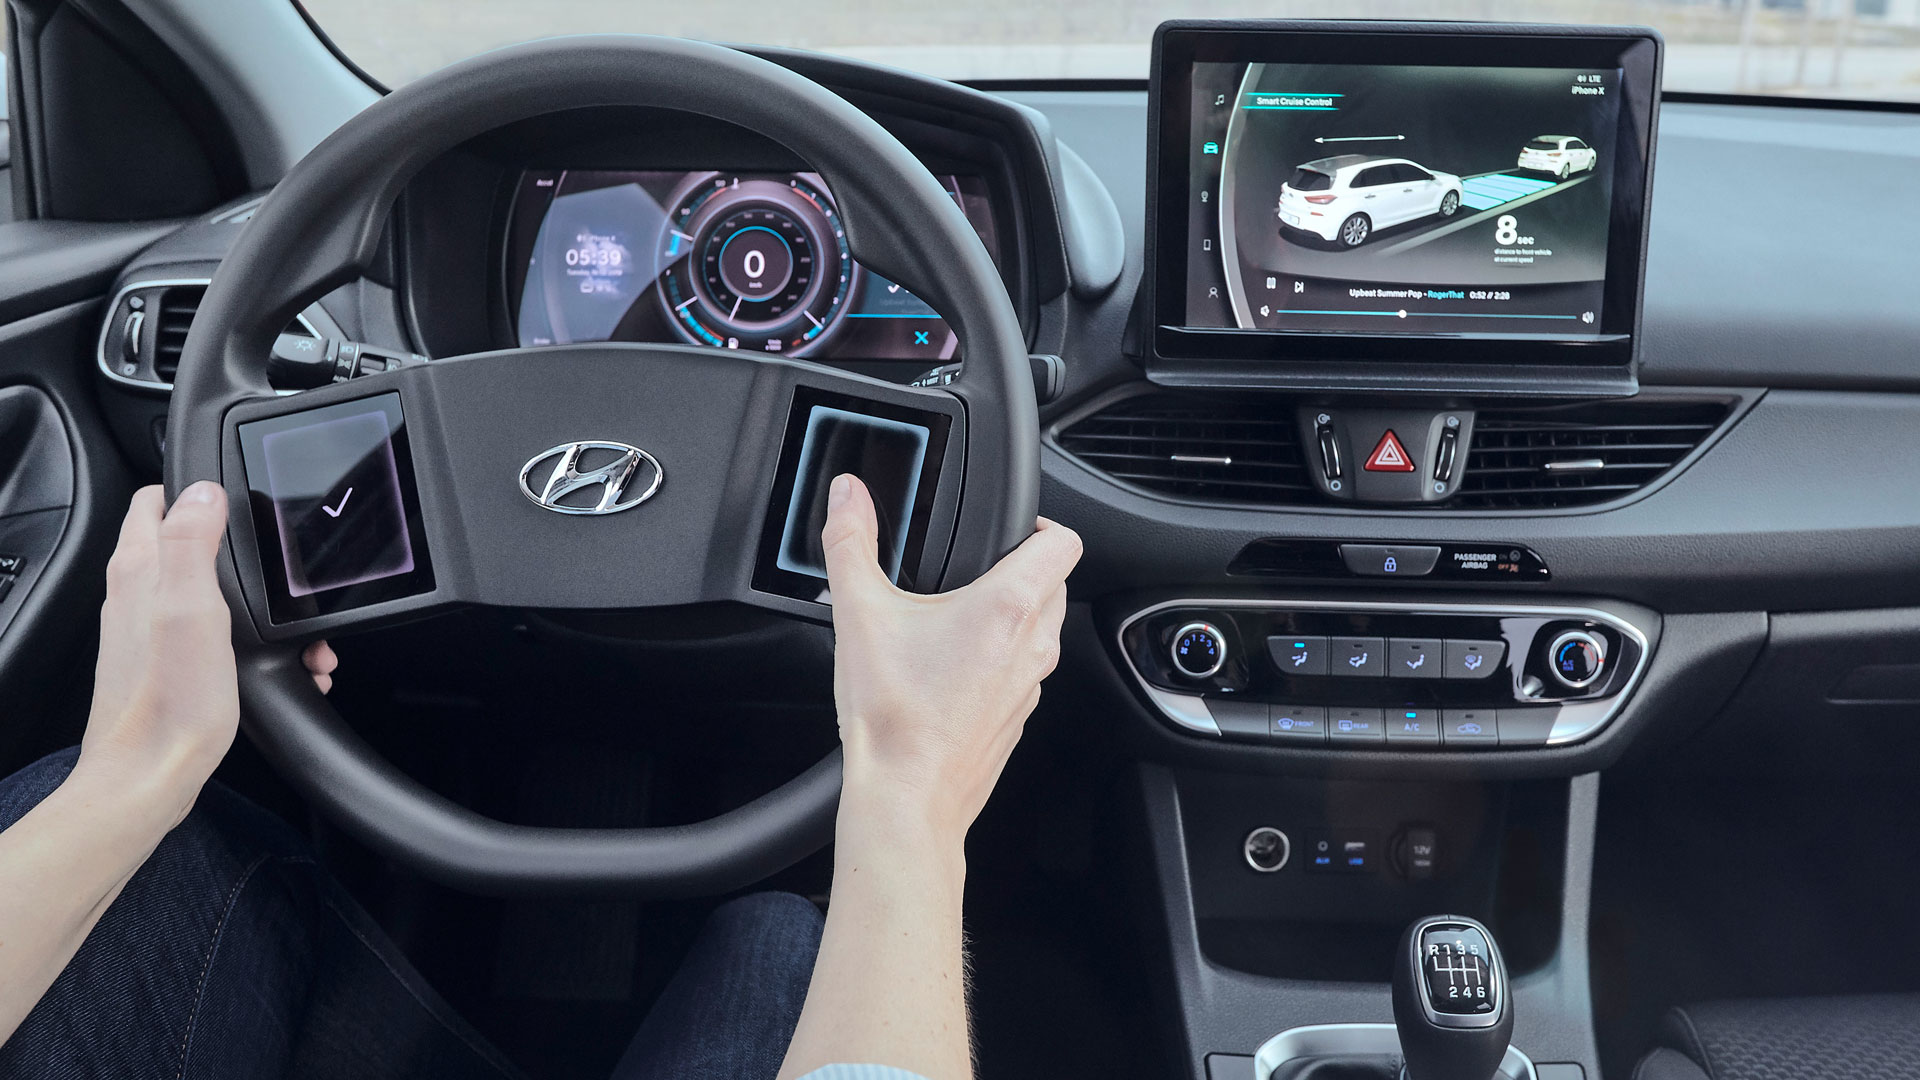 Hyundai cockpit future